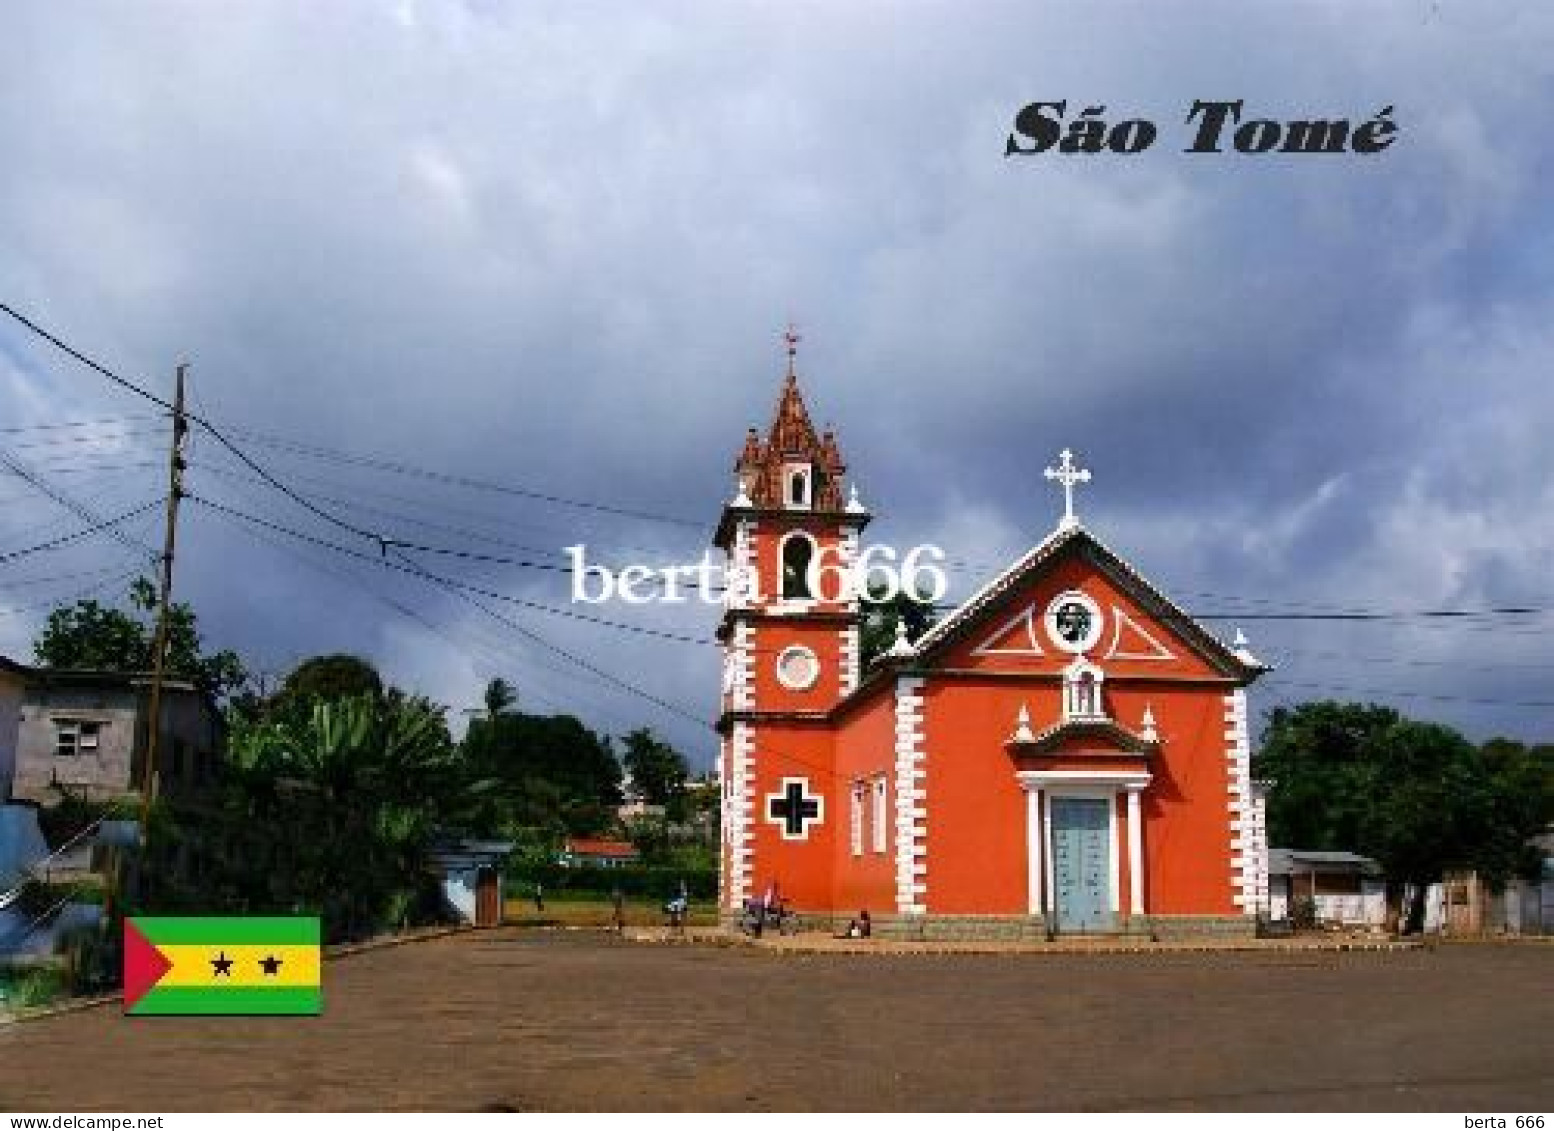 Sao Tome And Principe Pantufo St. Peter Church New Postcard - Sao Tome En Principe